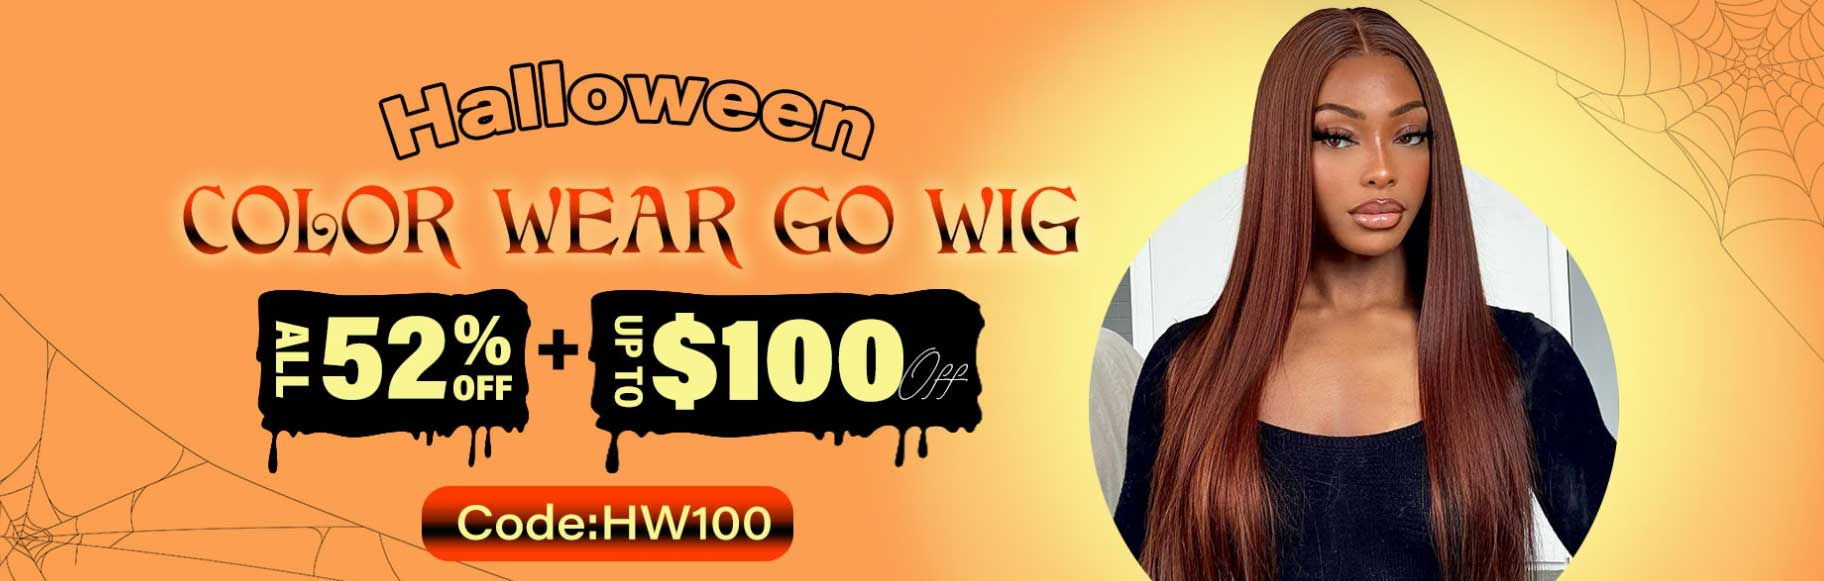 bgmgirl-hair-halloween-wigs-sale